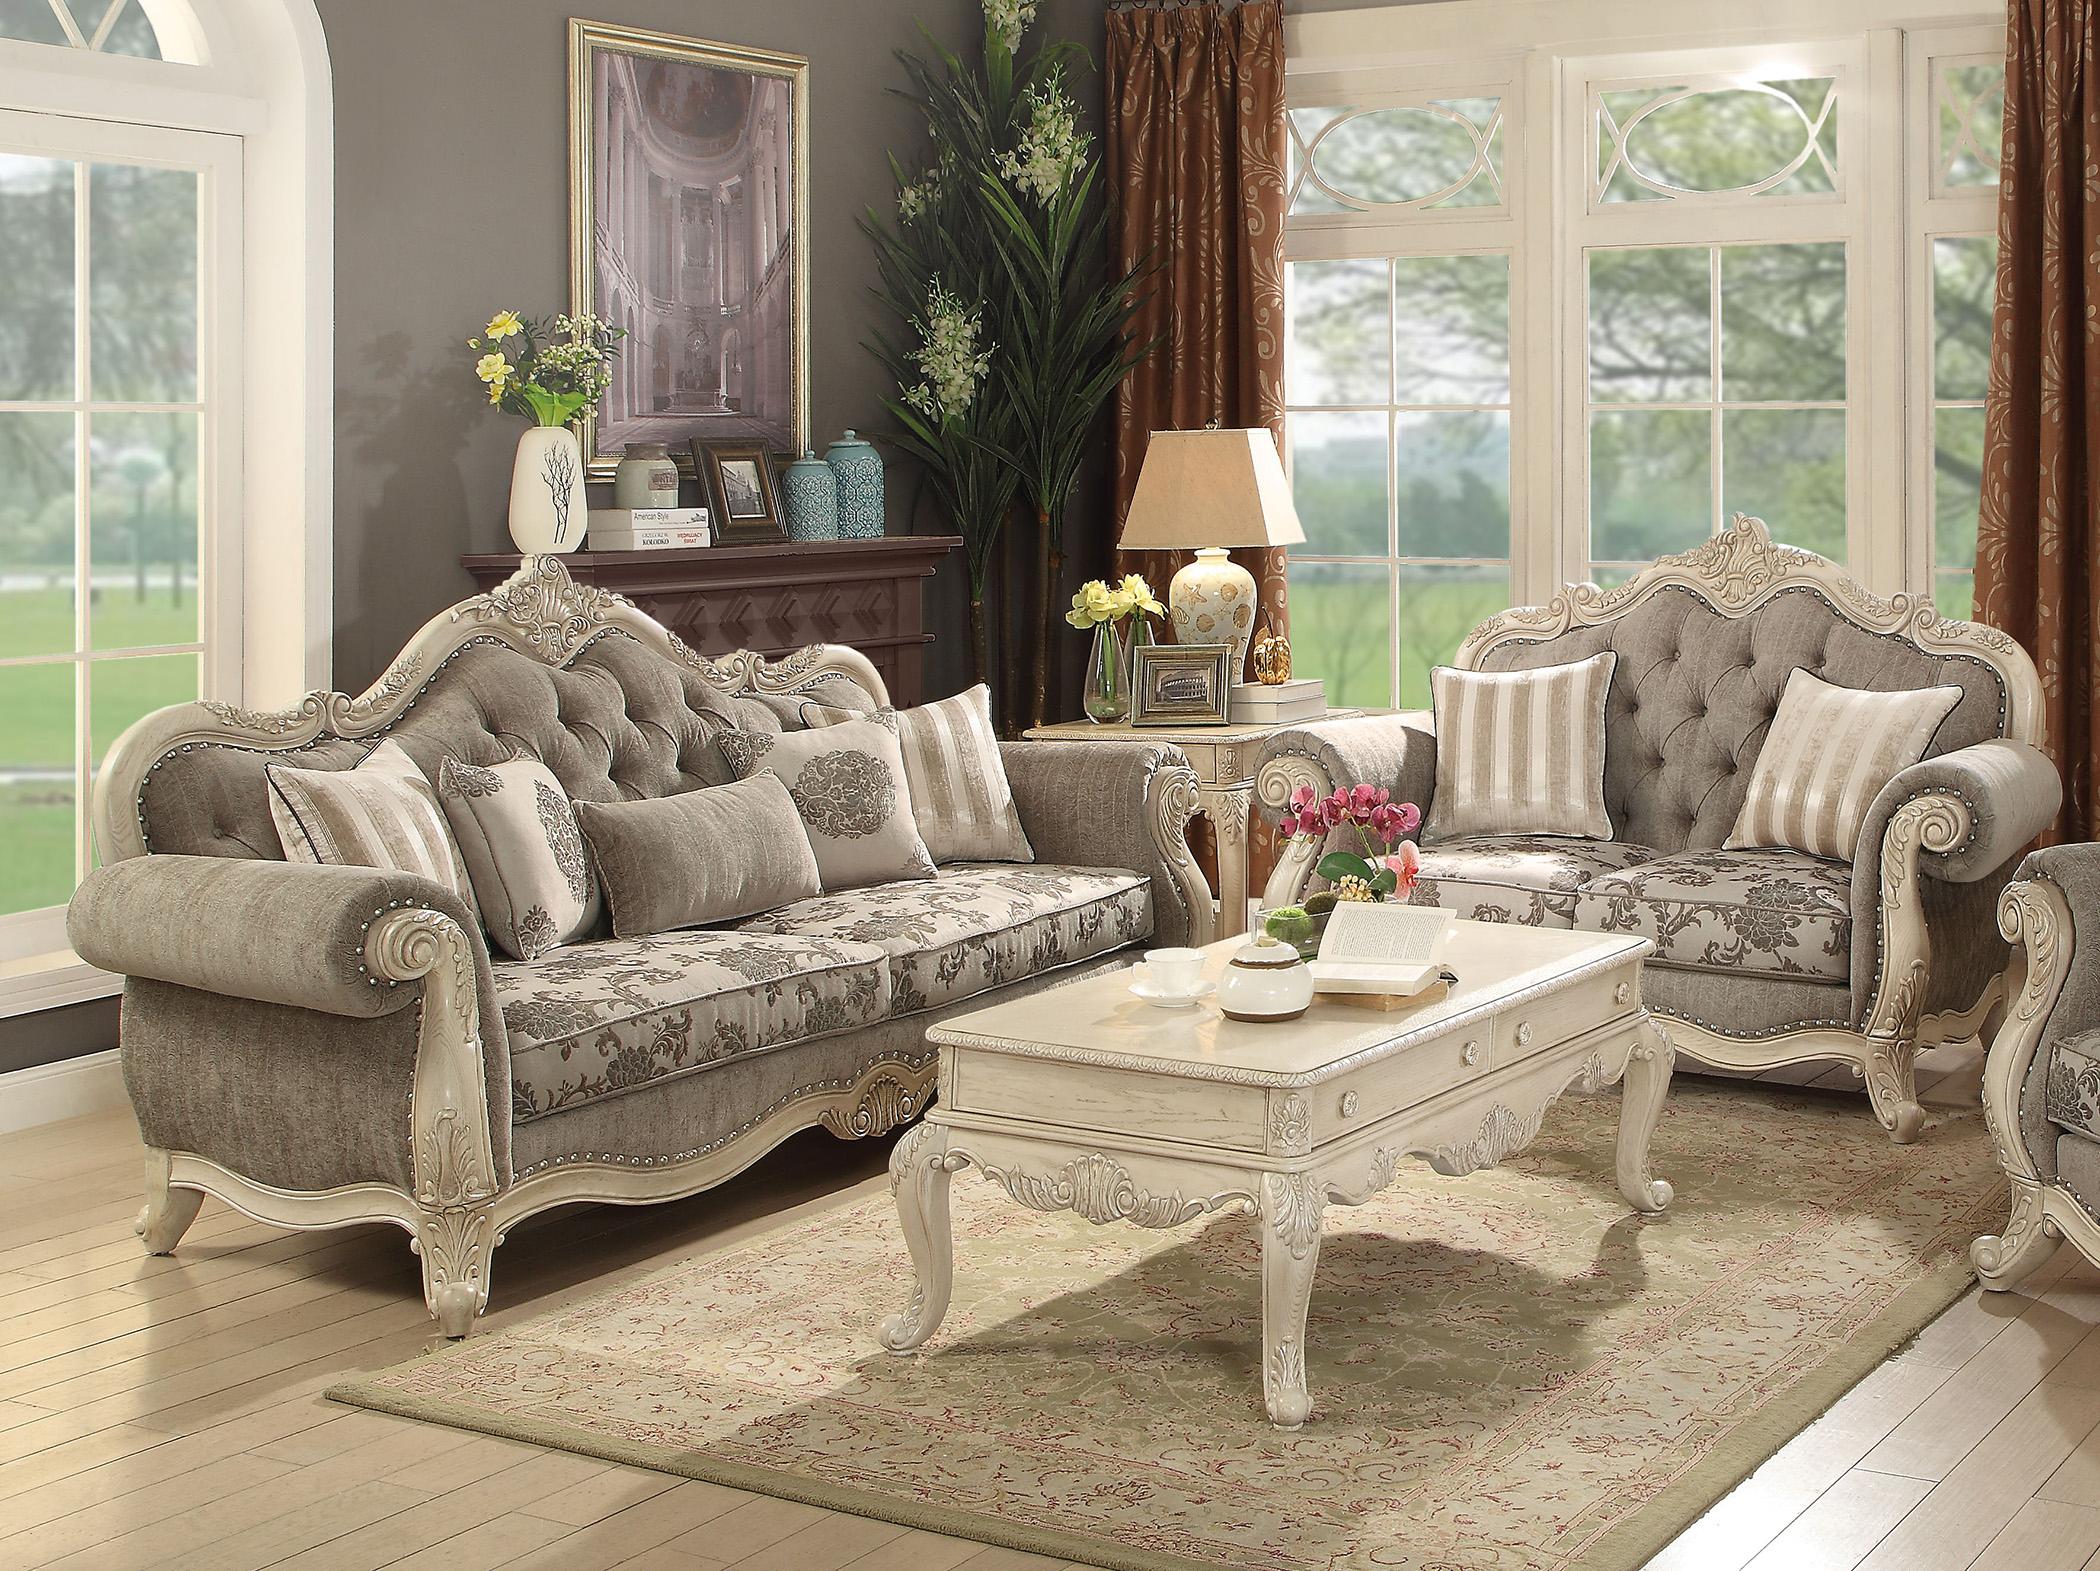 

    
Antique White & Gray Tufted Sofa Set 2Pcs Ragenardus-WH-56020 Acme Traditional
